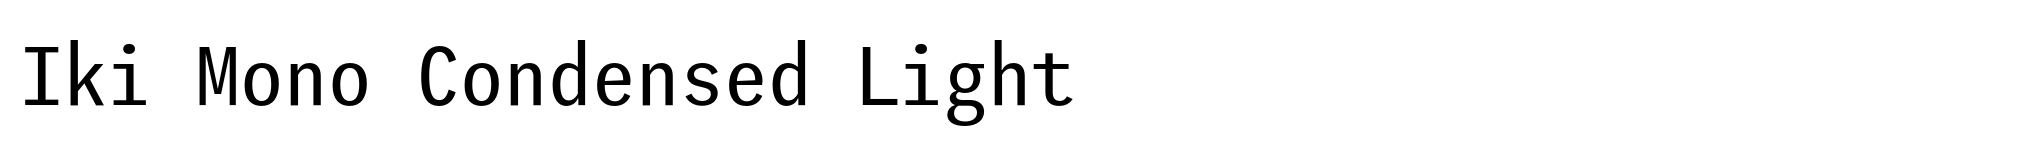 Iki Mono Condensed Light image